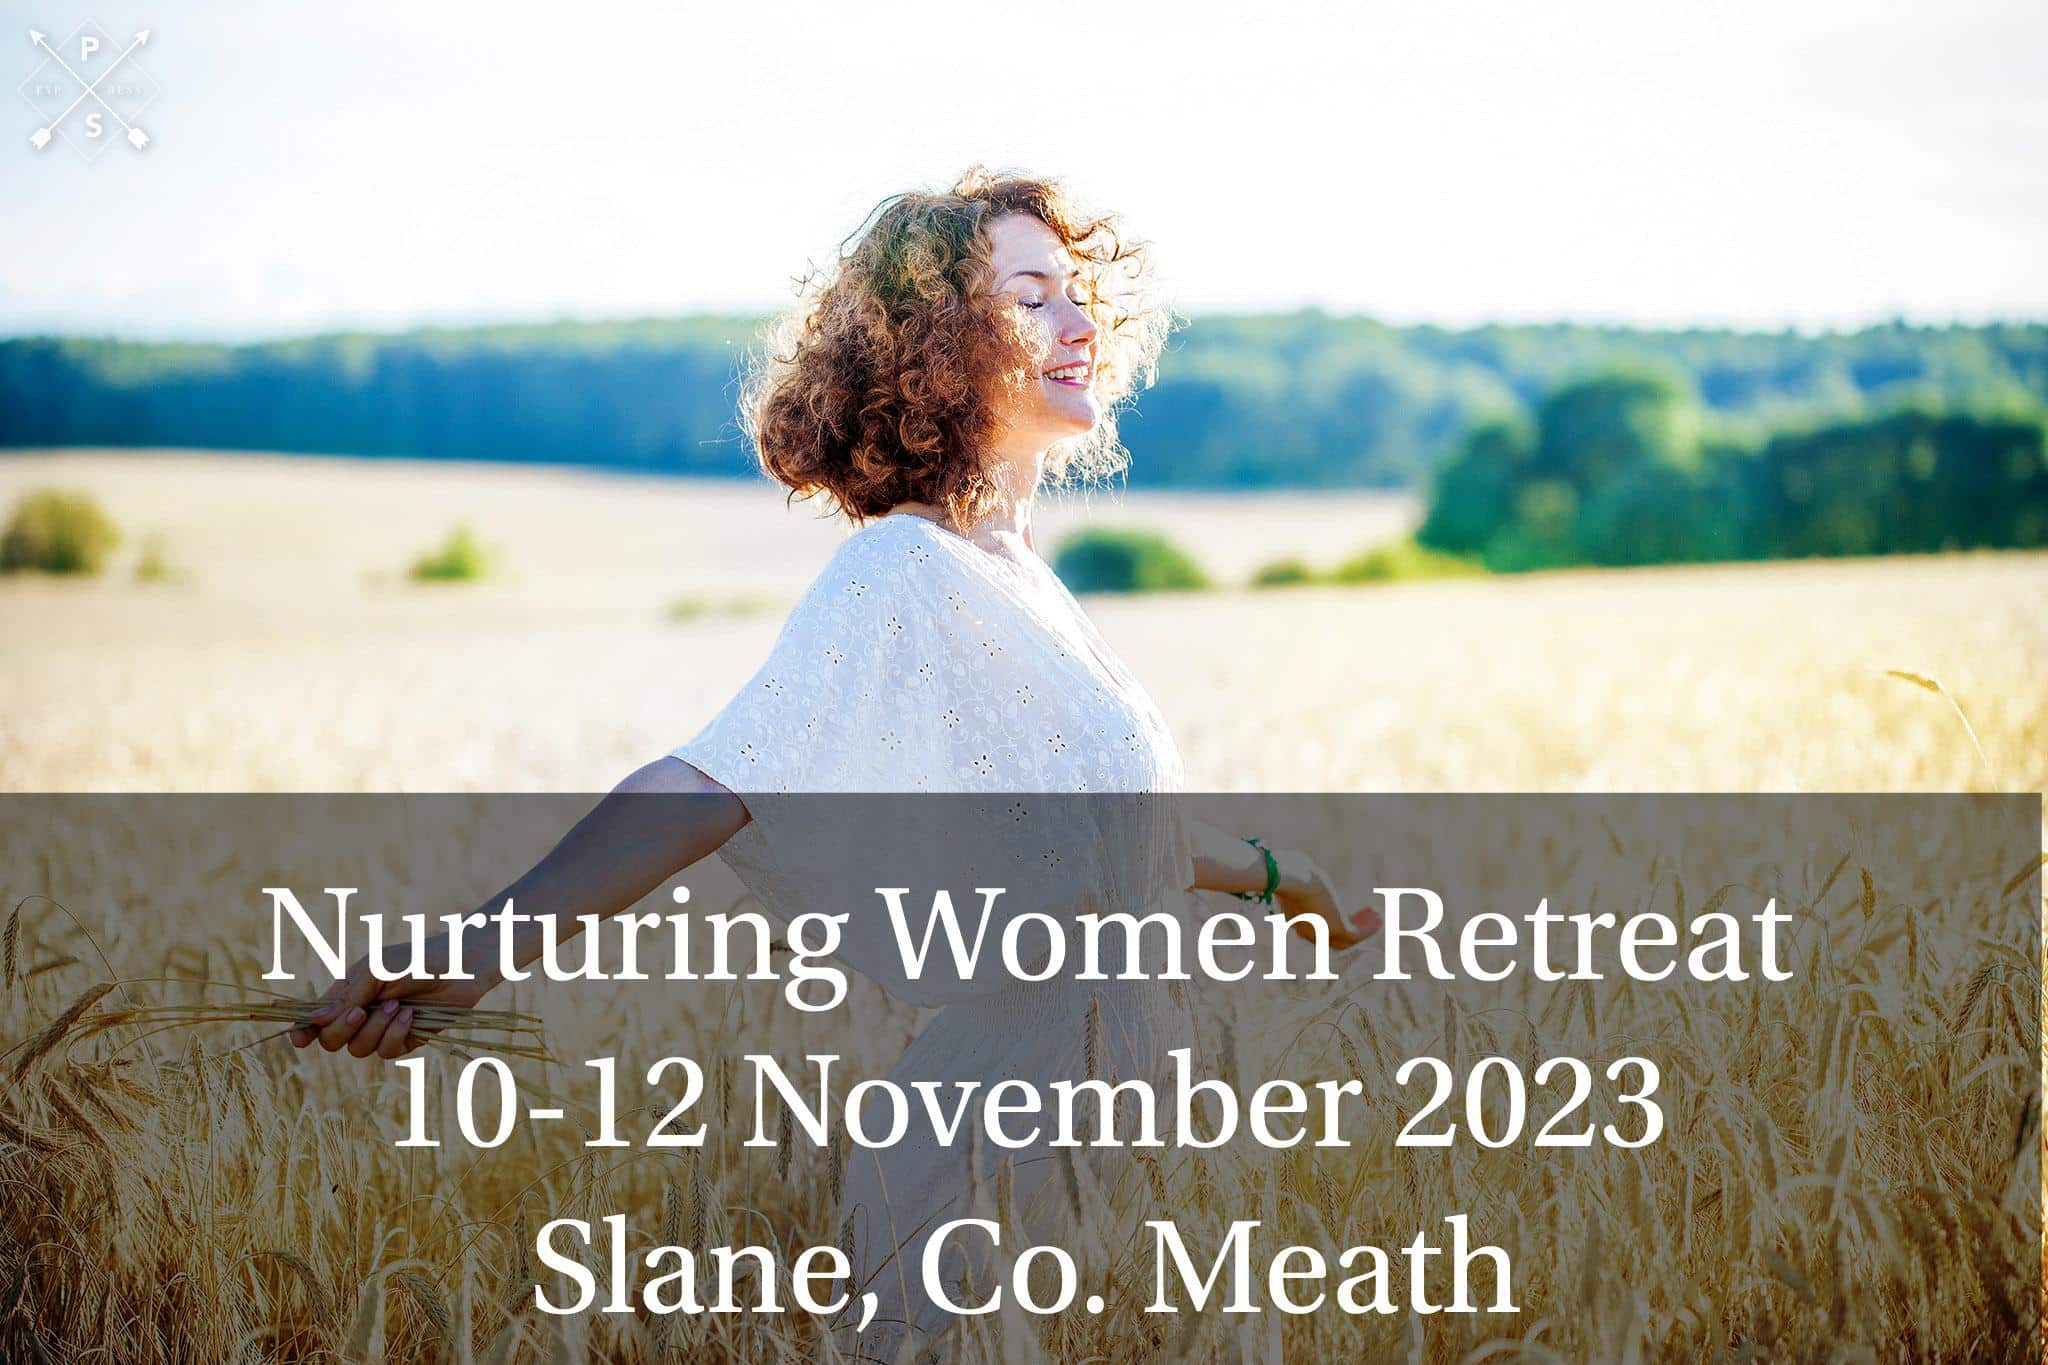 Nurturing Women's retreat III